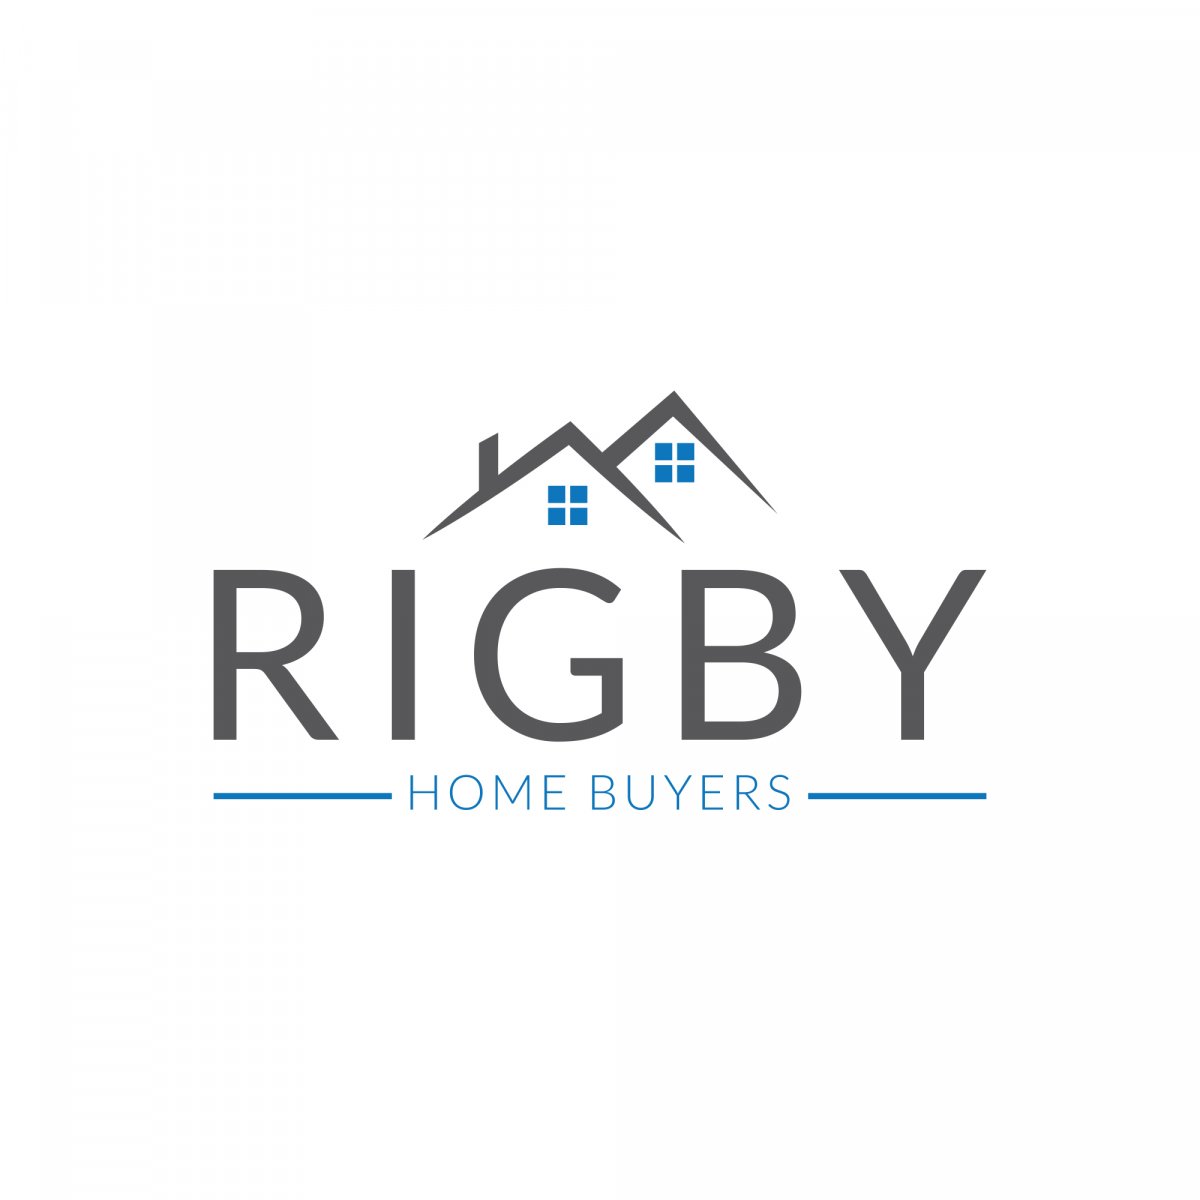 Rigby Home Buyers logo